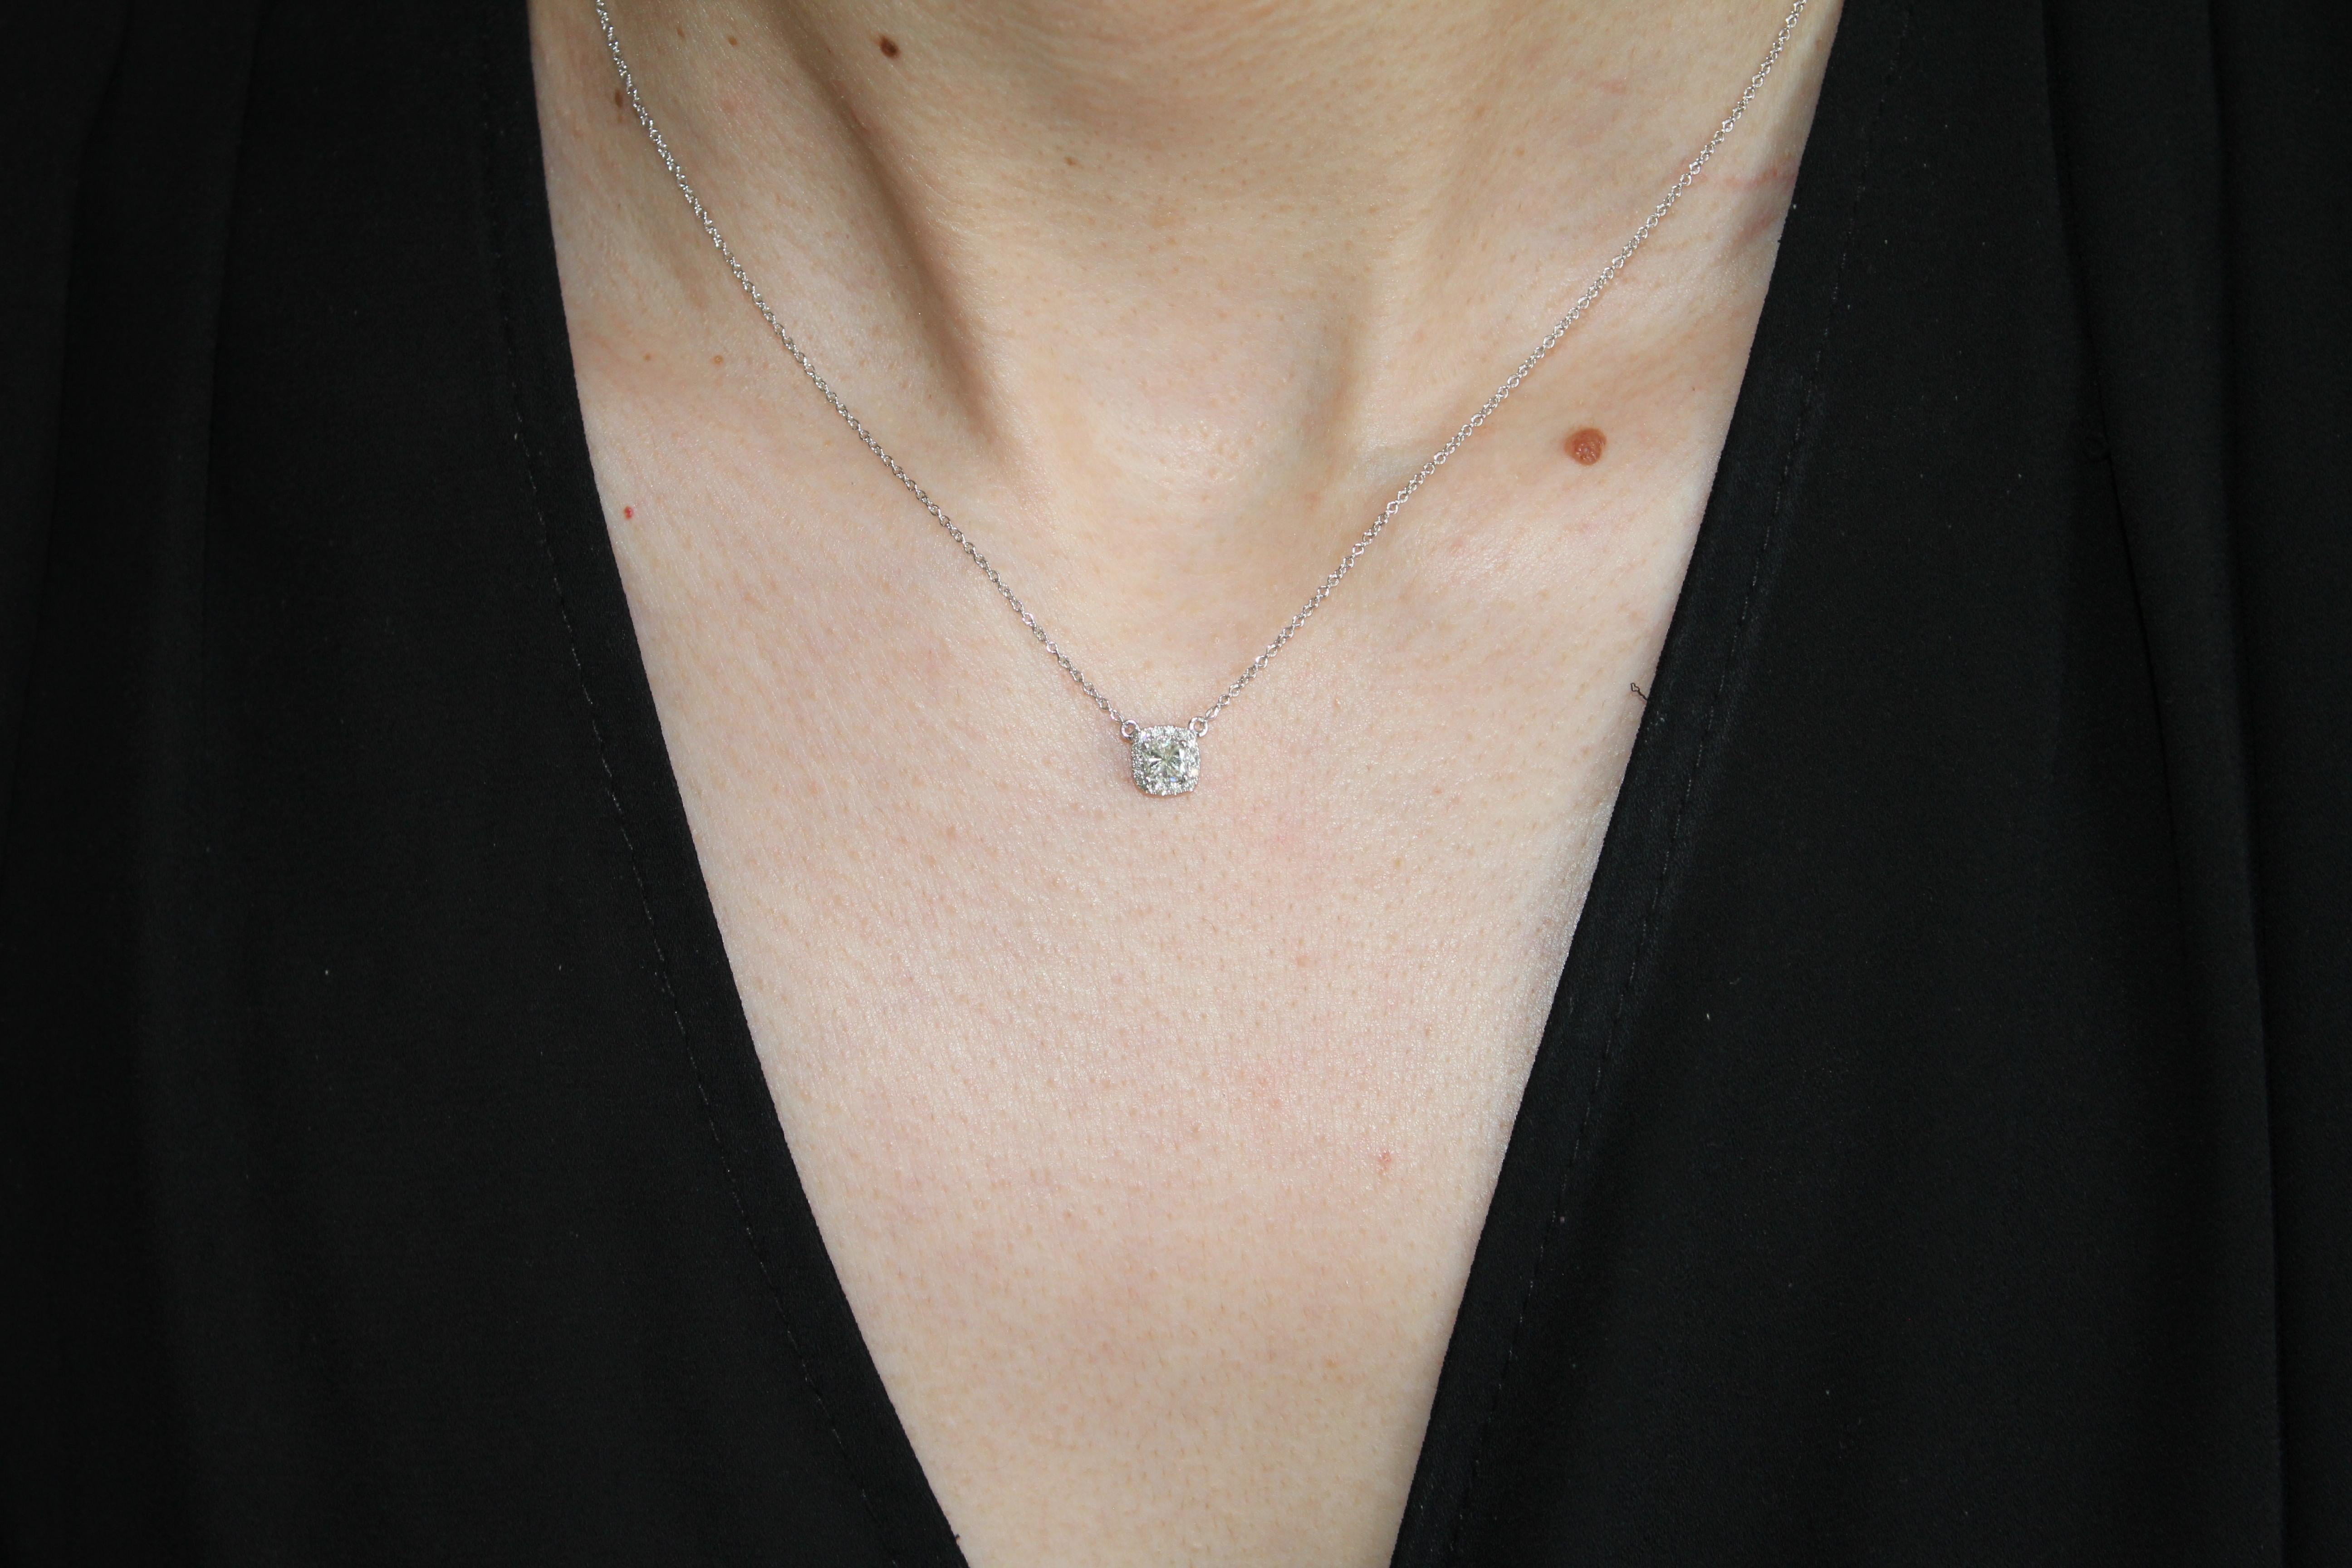 Halo Pave Cushion Cut Diamond Pendant 18 Karat White Gold Necklace Chain Charm For Sale 2